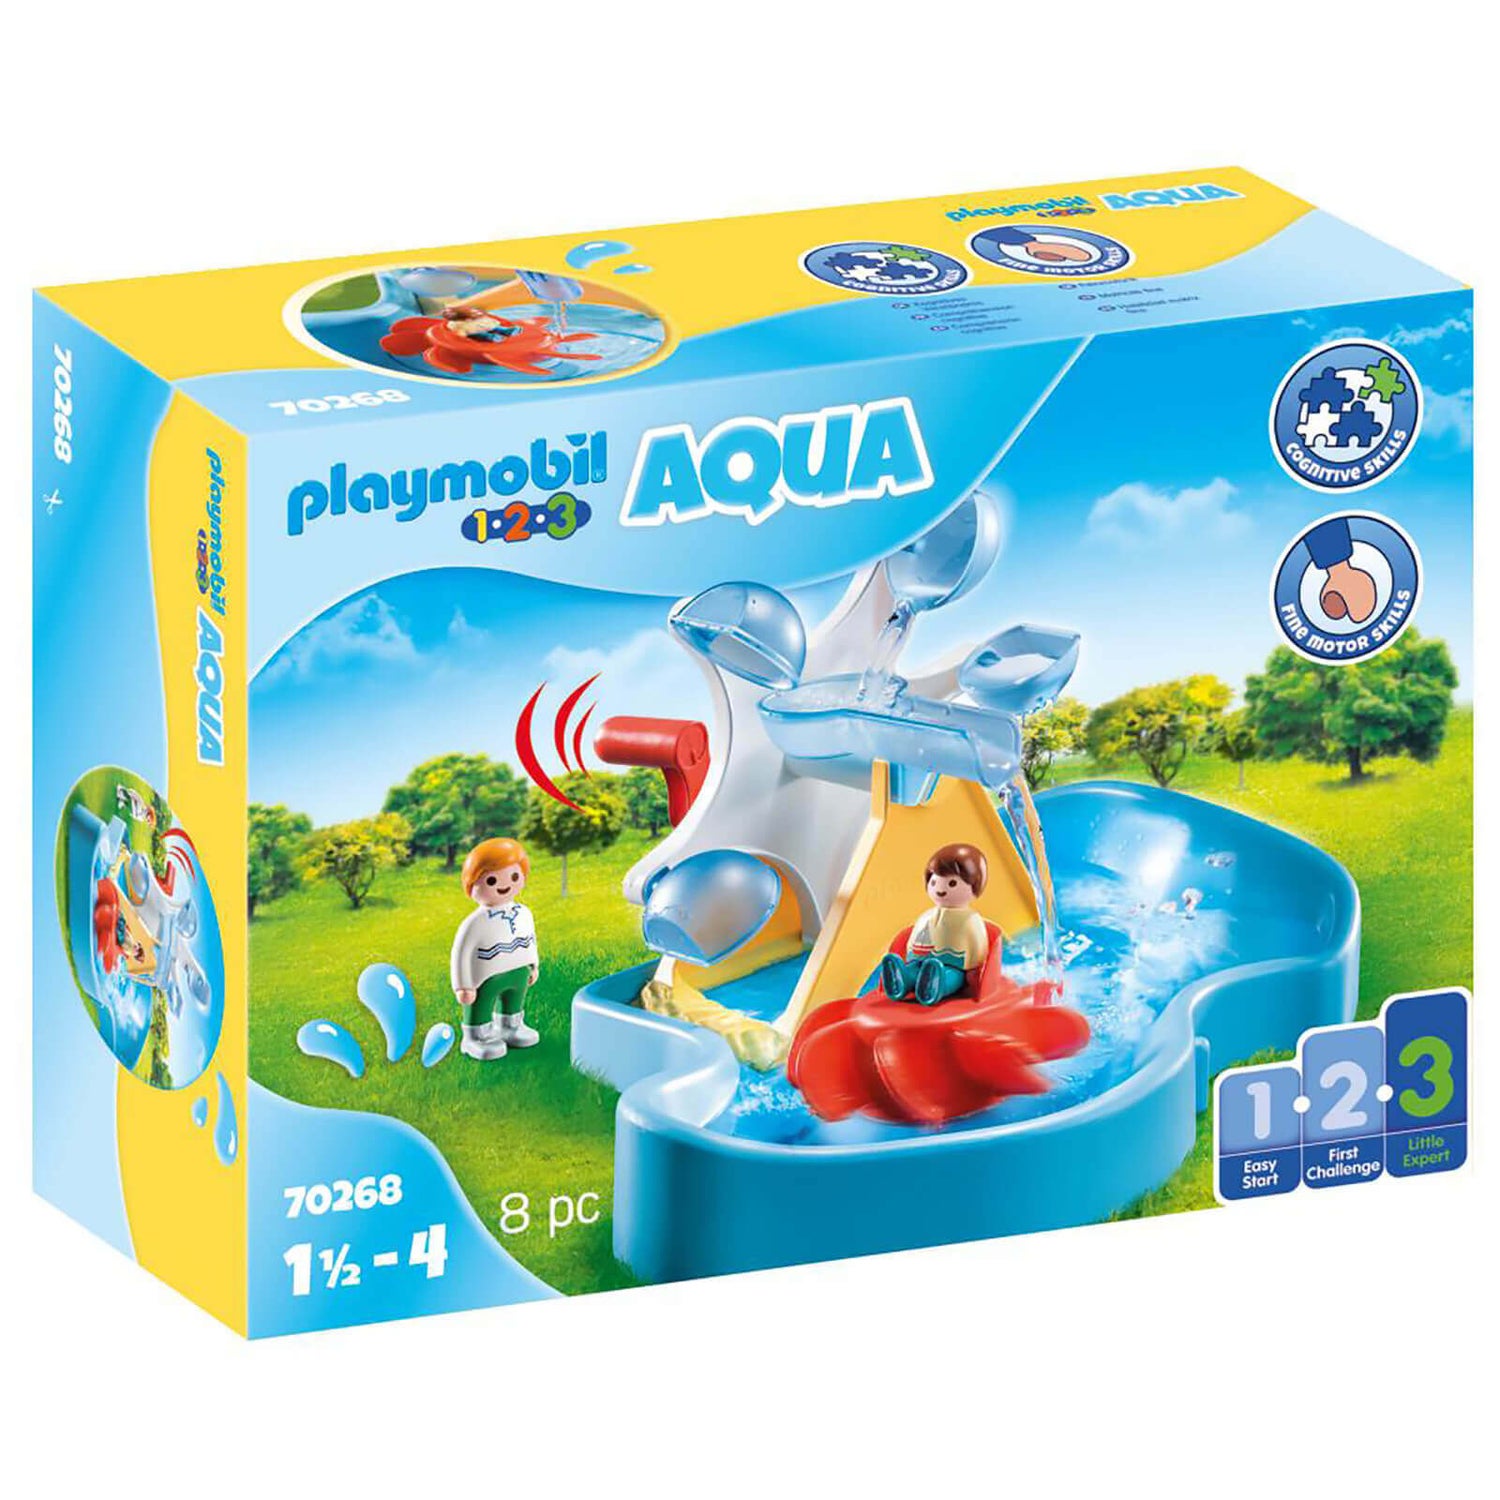 Playmobil AQUA Water Wheel Carousel For 18+ Months (70268)